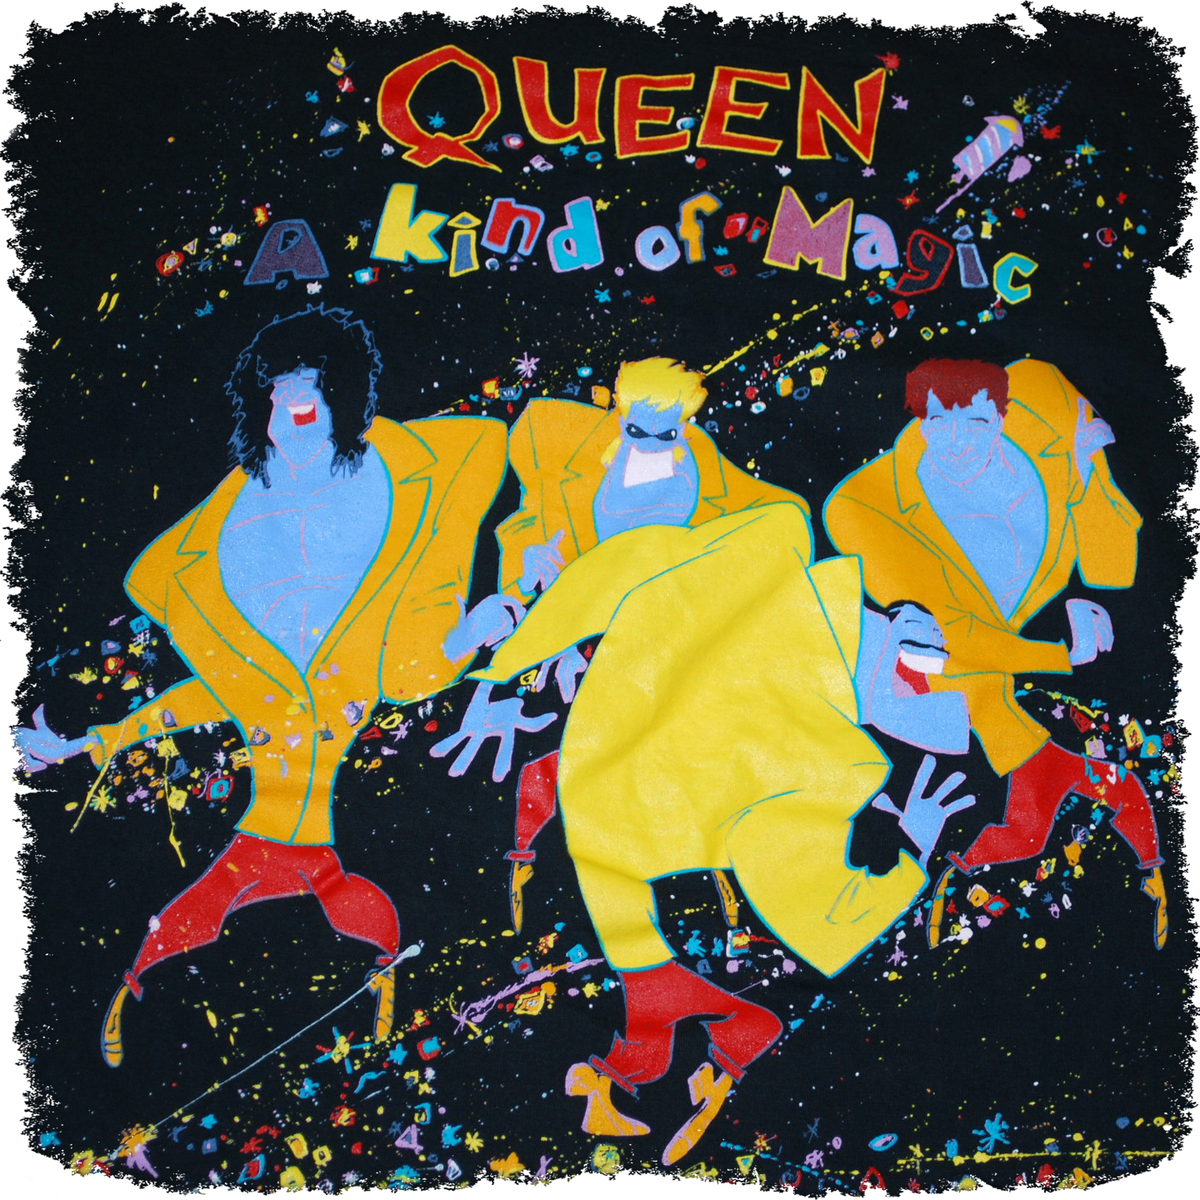 Magic обложка. Альбом a kind of Magic 1986. Queen 1986 a kind of Magic обложка альбома. A kind of Magic альбом Квин. Queen a kind of Magic обложка.